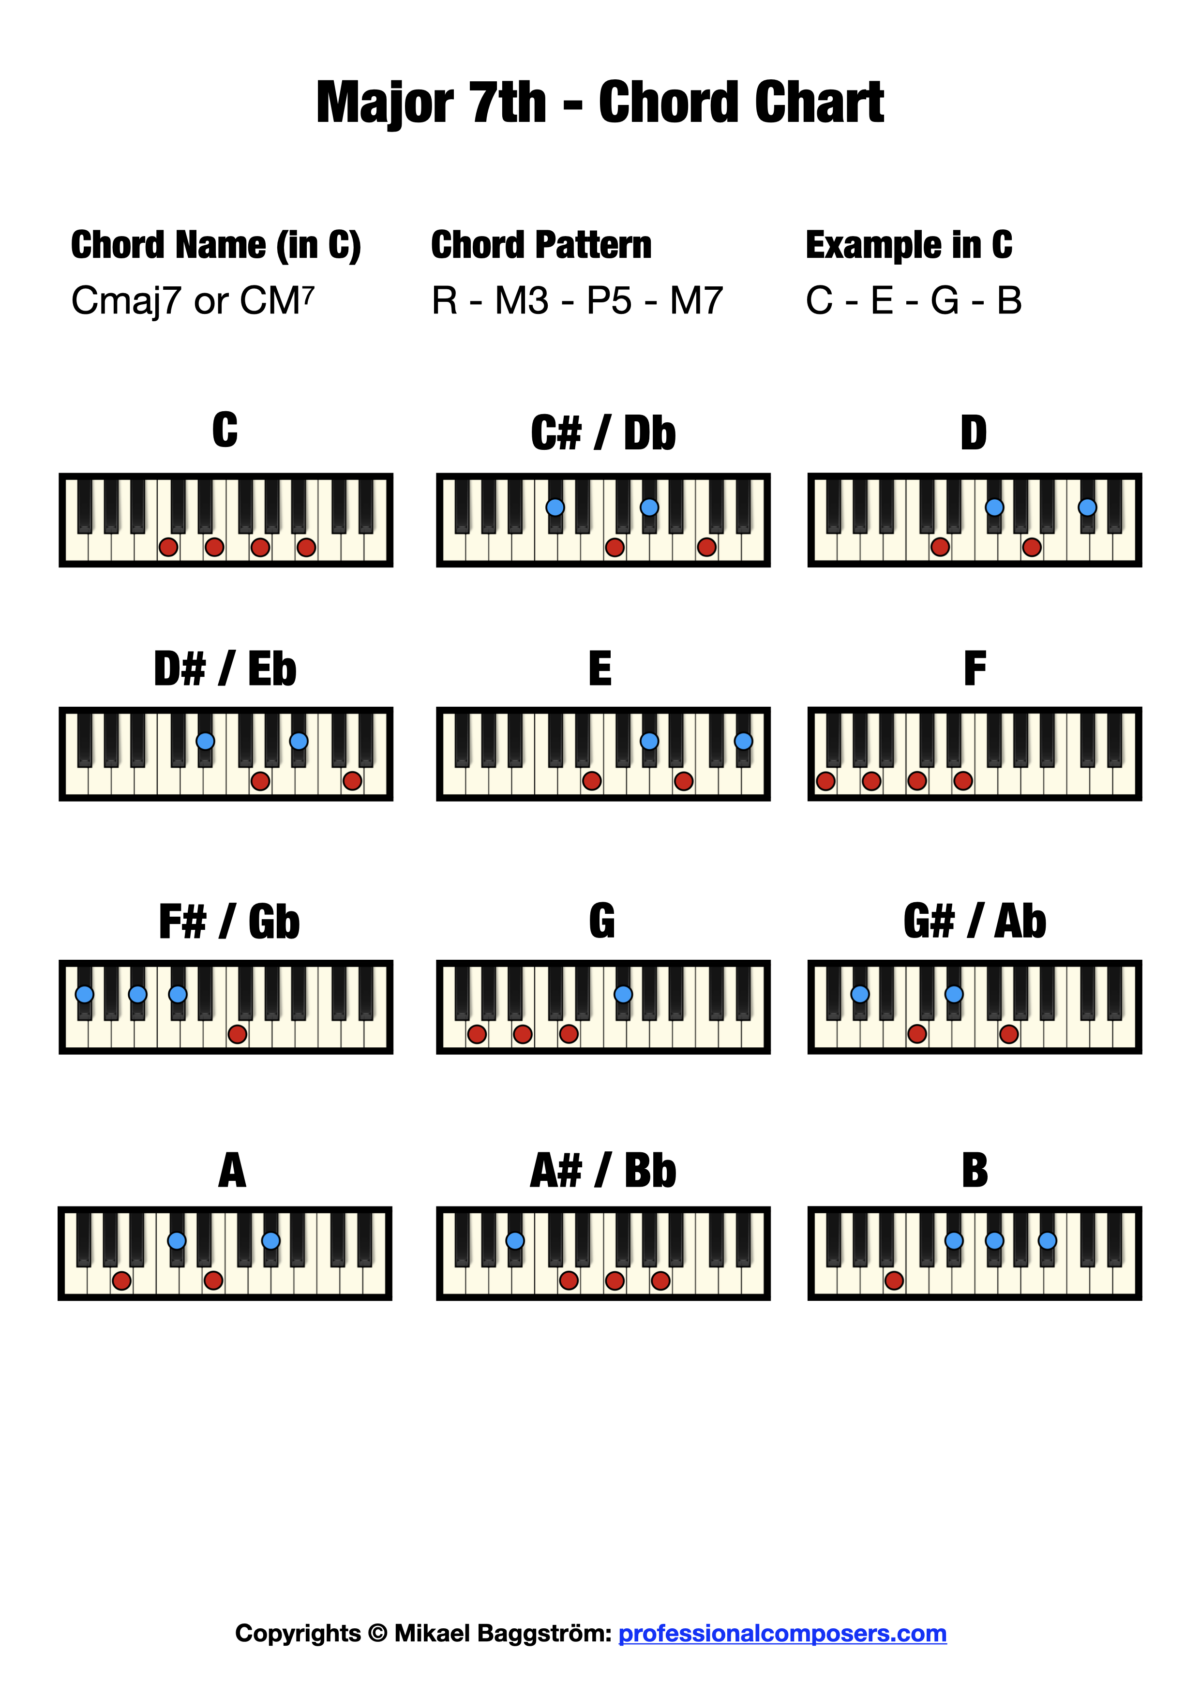 Major 7th Chord Chart on Piano